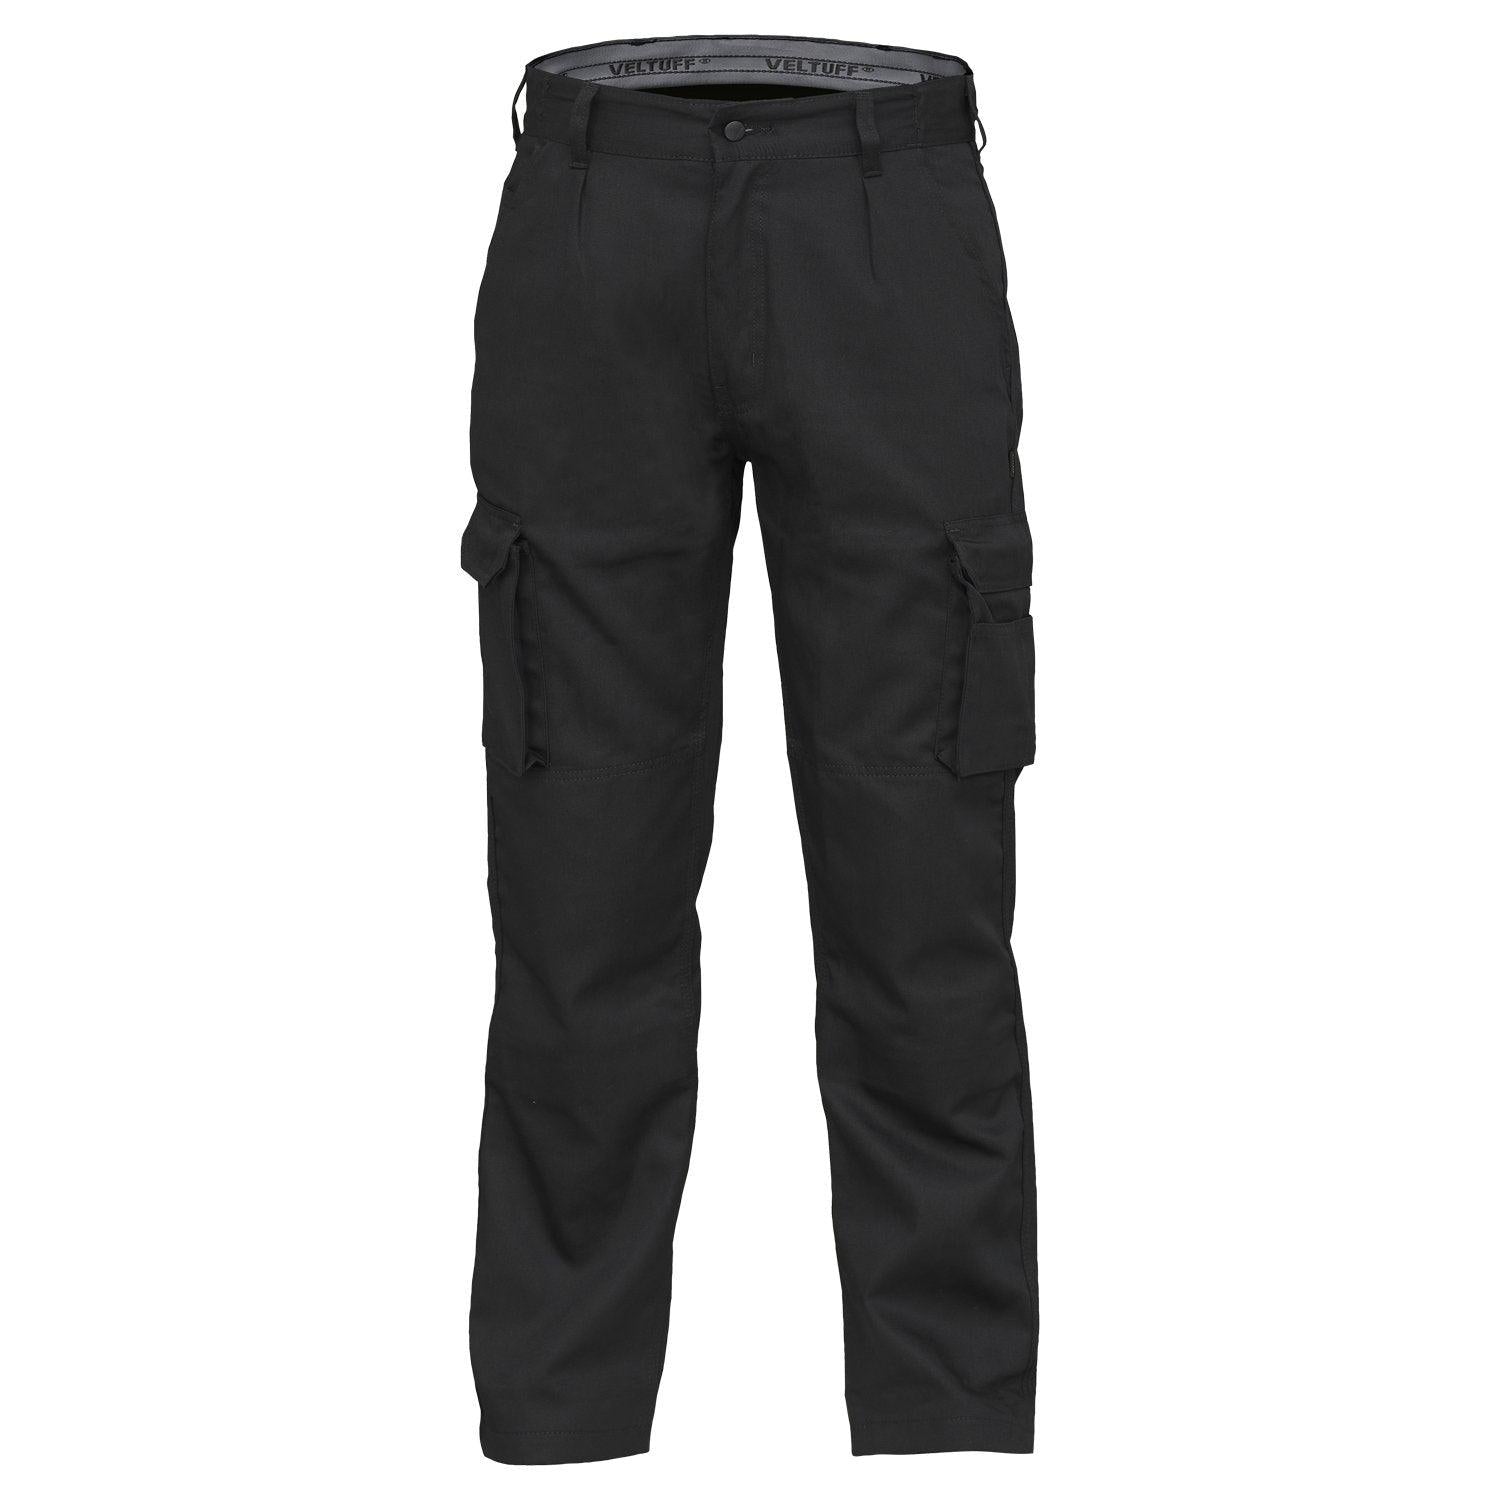 Pantalon de travail Homme FORTIS 24, Dark grey/black,Taille 48